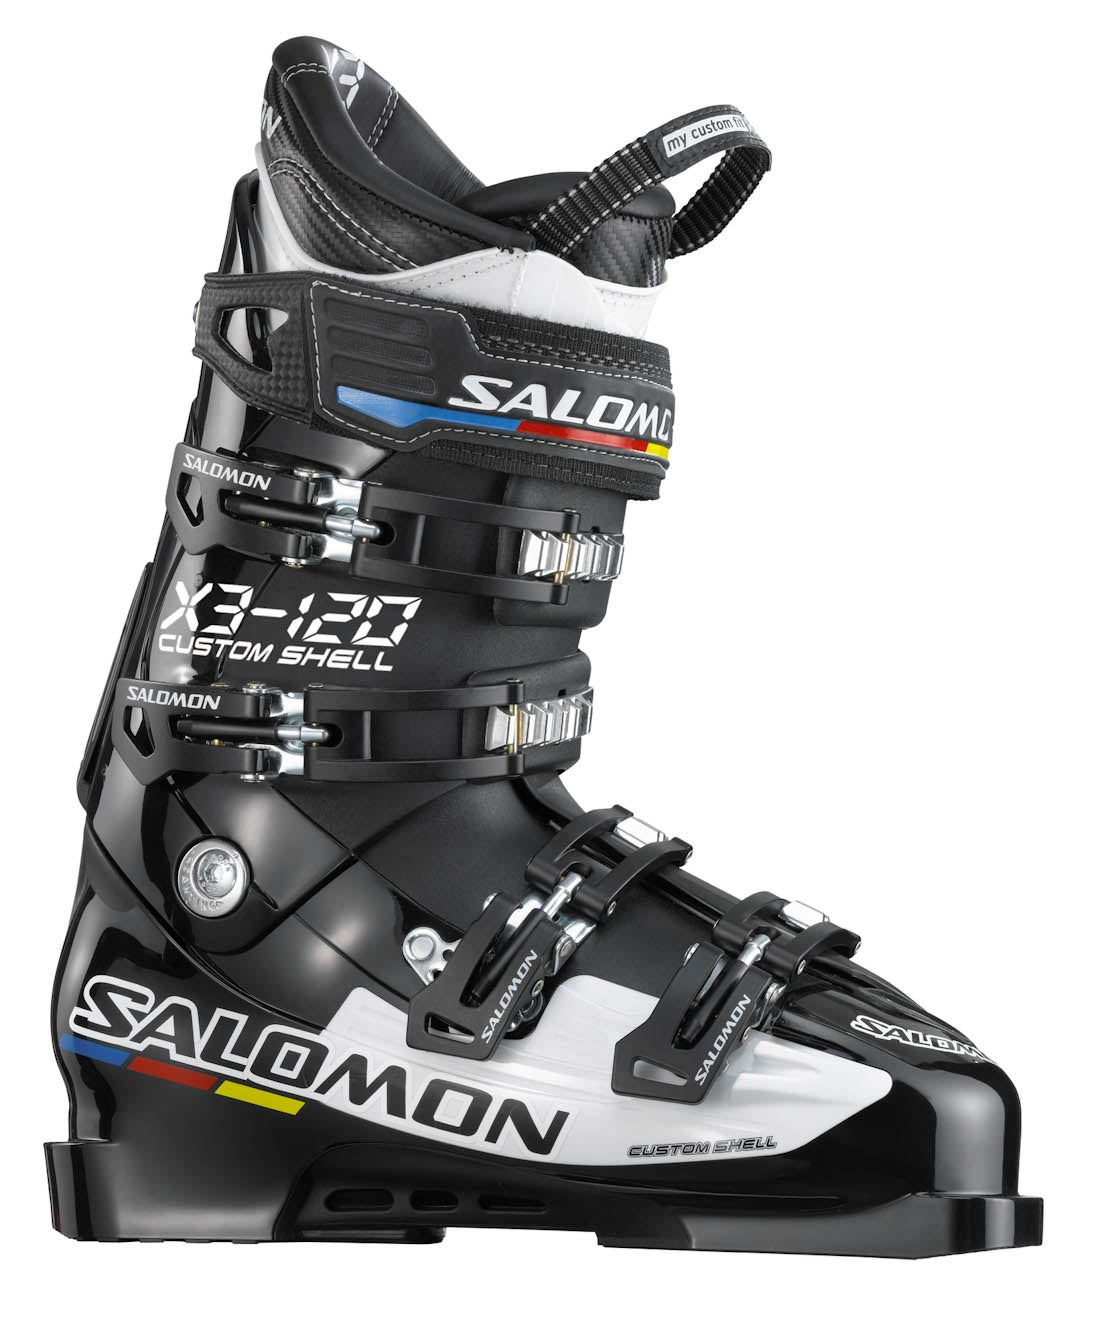 Salomon 120 CS (2012) - Ski Mag